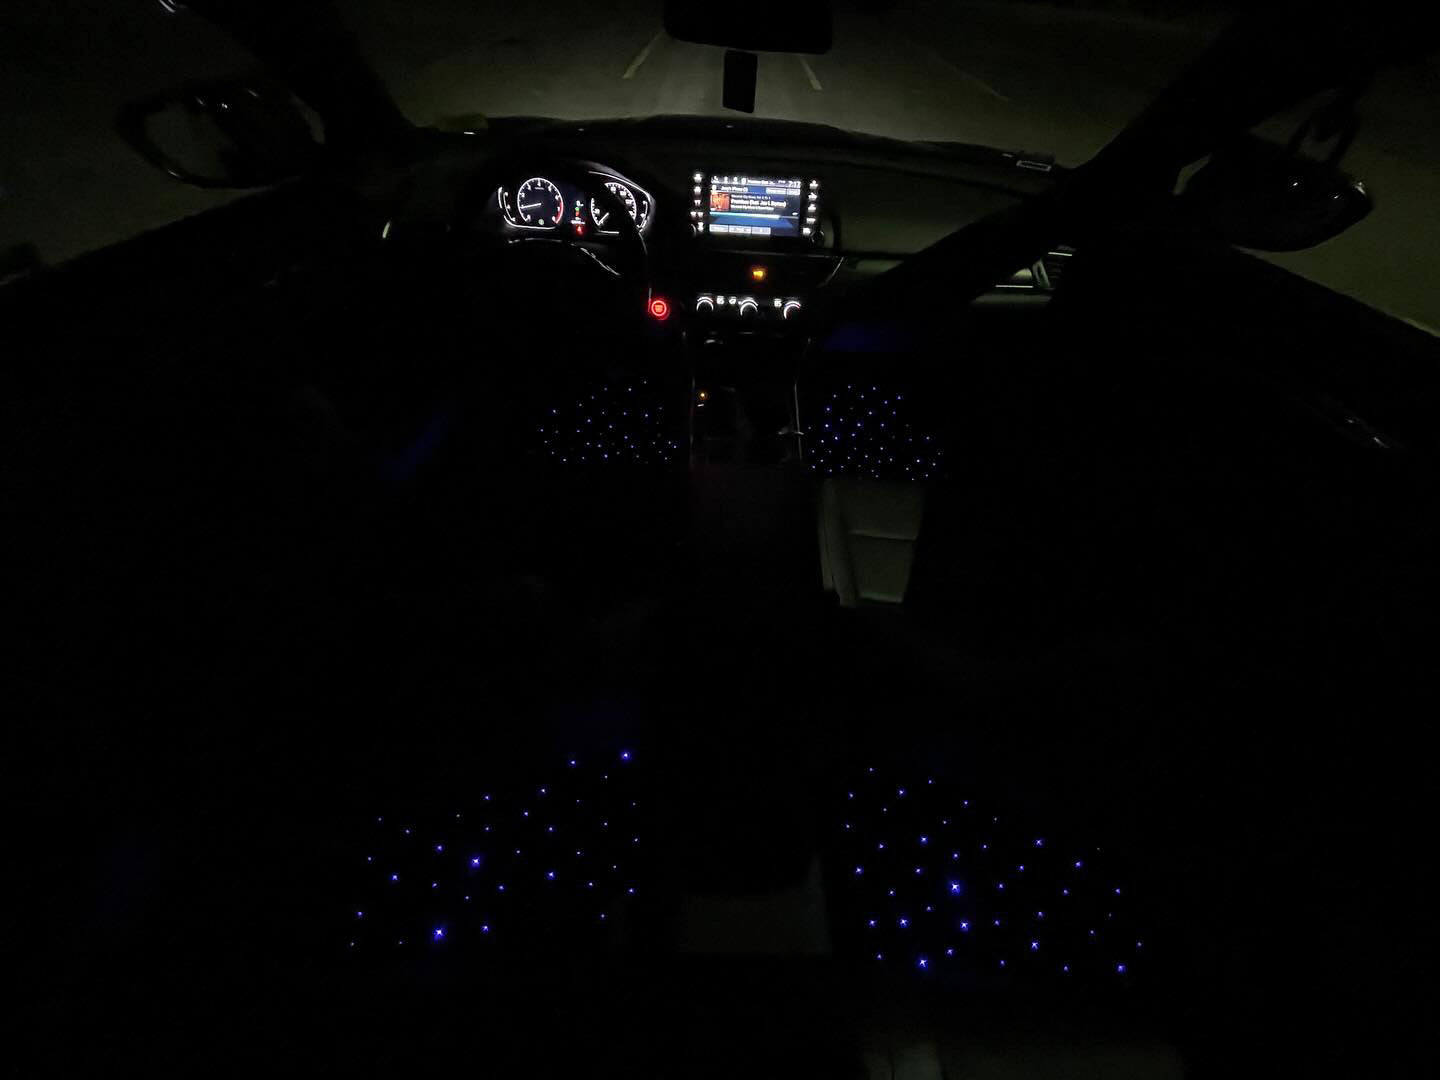 Starlight Fiber Optic Car Floor Mats